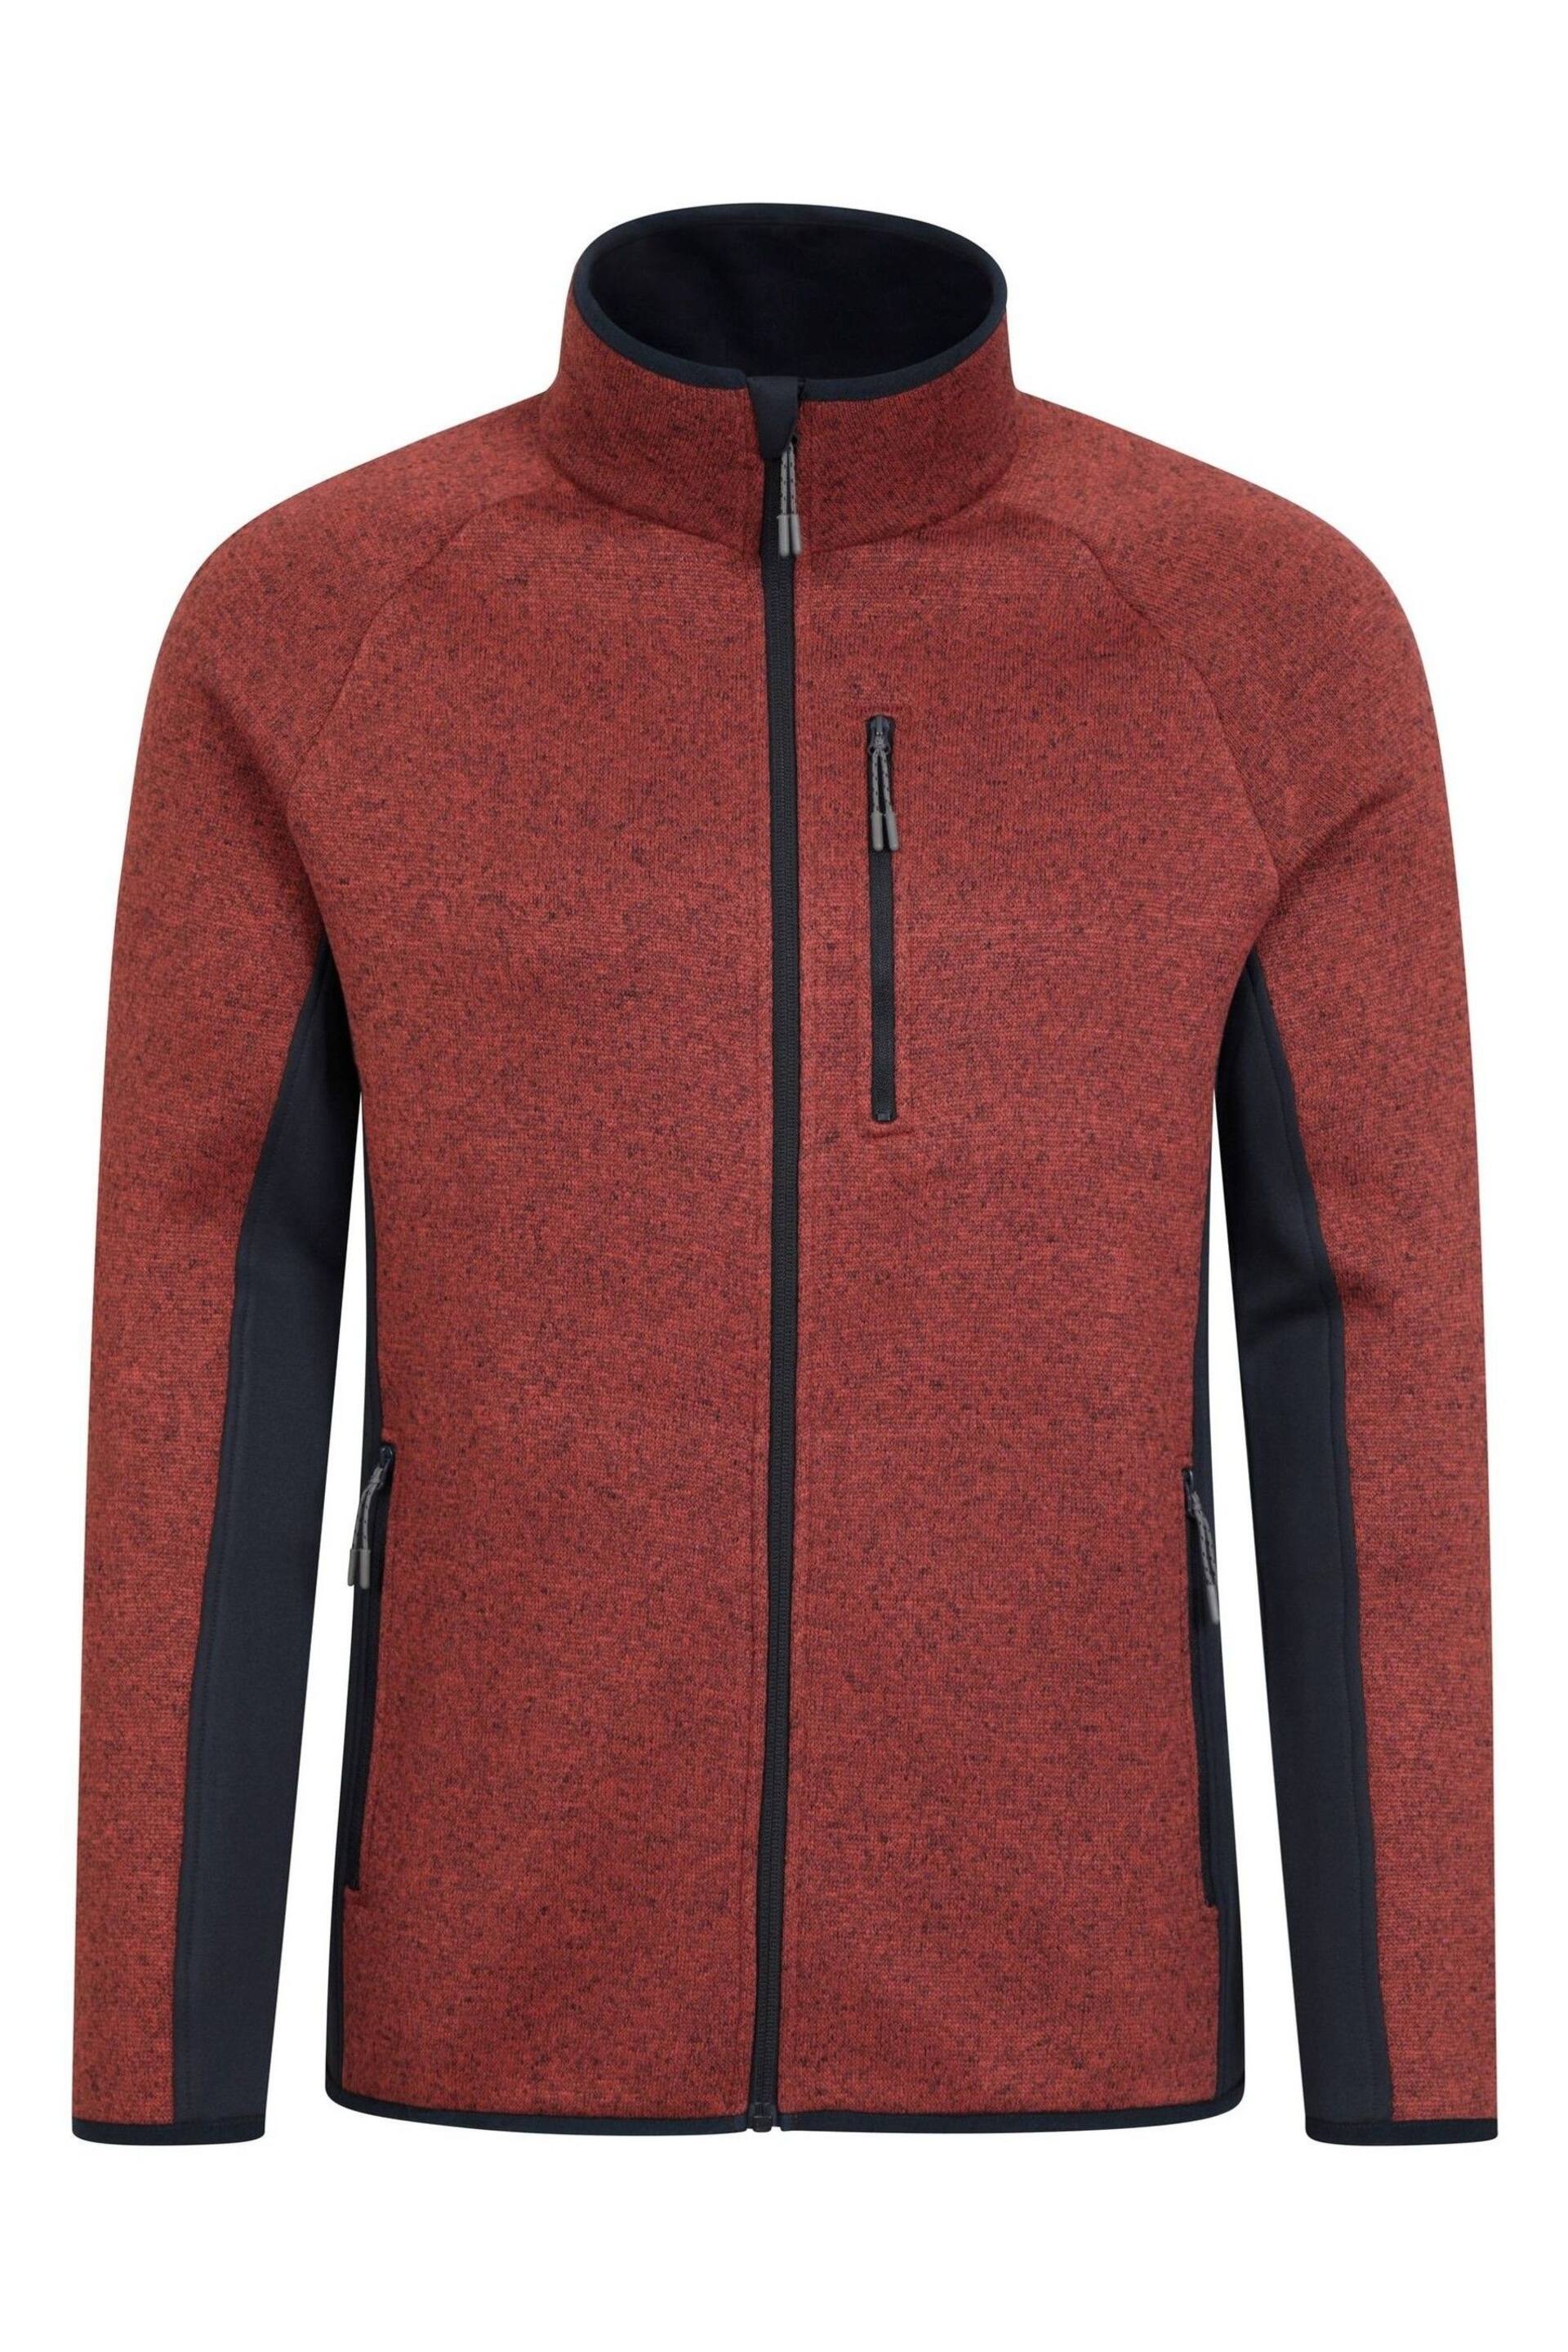 Mountain Warehouse Red Mens Treston Full Zip Fleece Jacket - Image 1 of 5